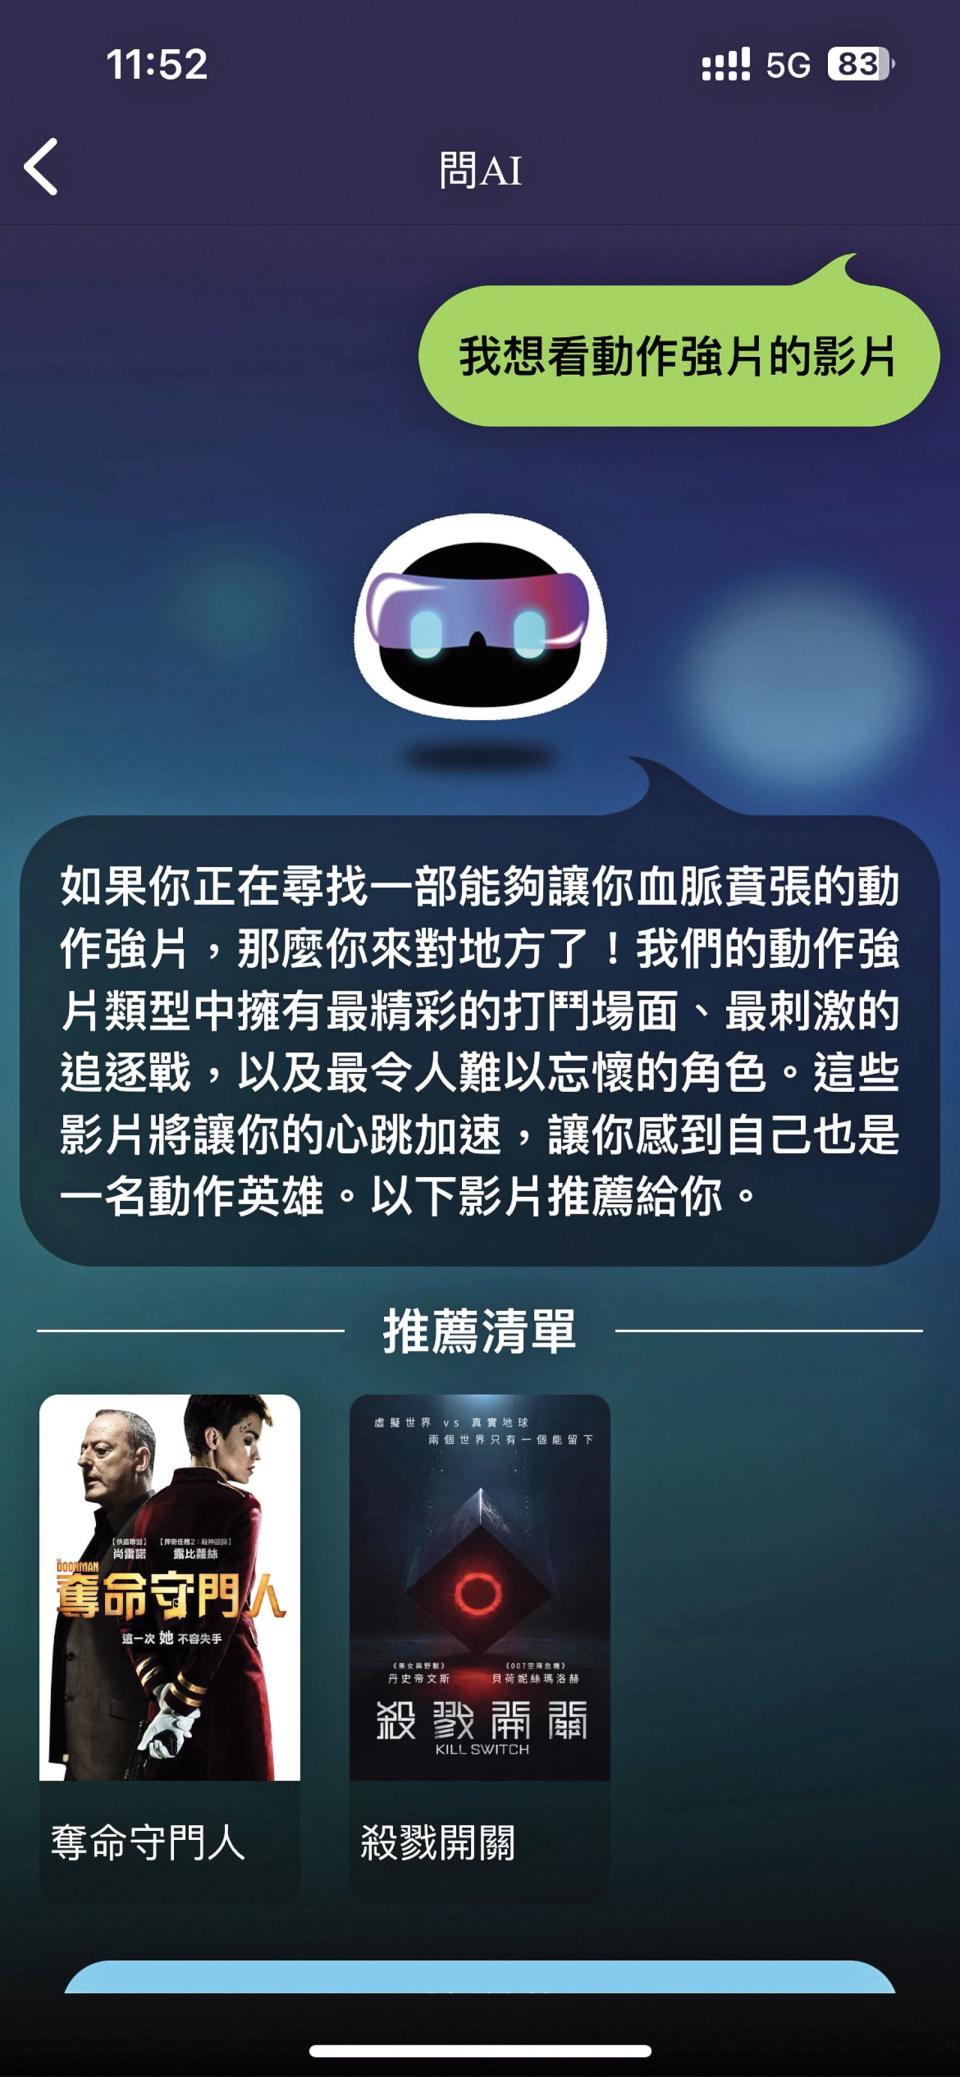 friDay影音是台灣第一個把生成式AI單獨拉出來、還能與人互動的串流平台。（friDay影音提供） 